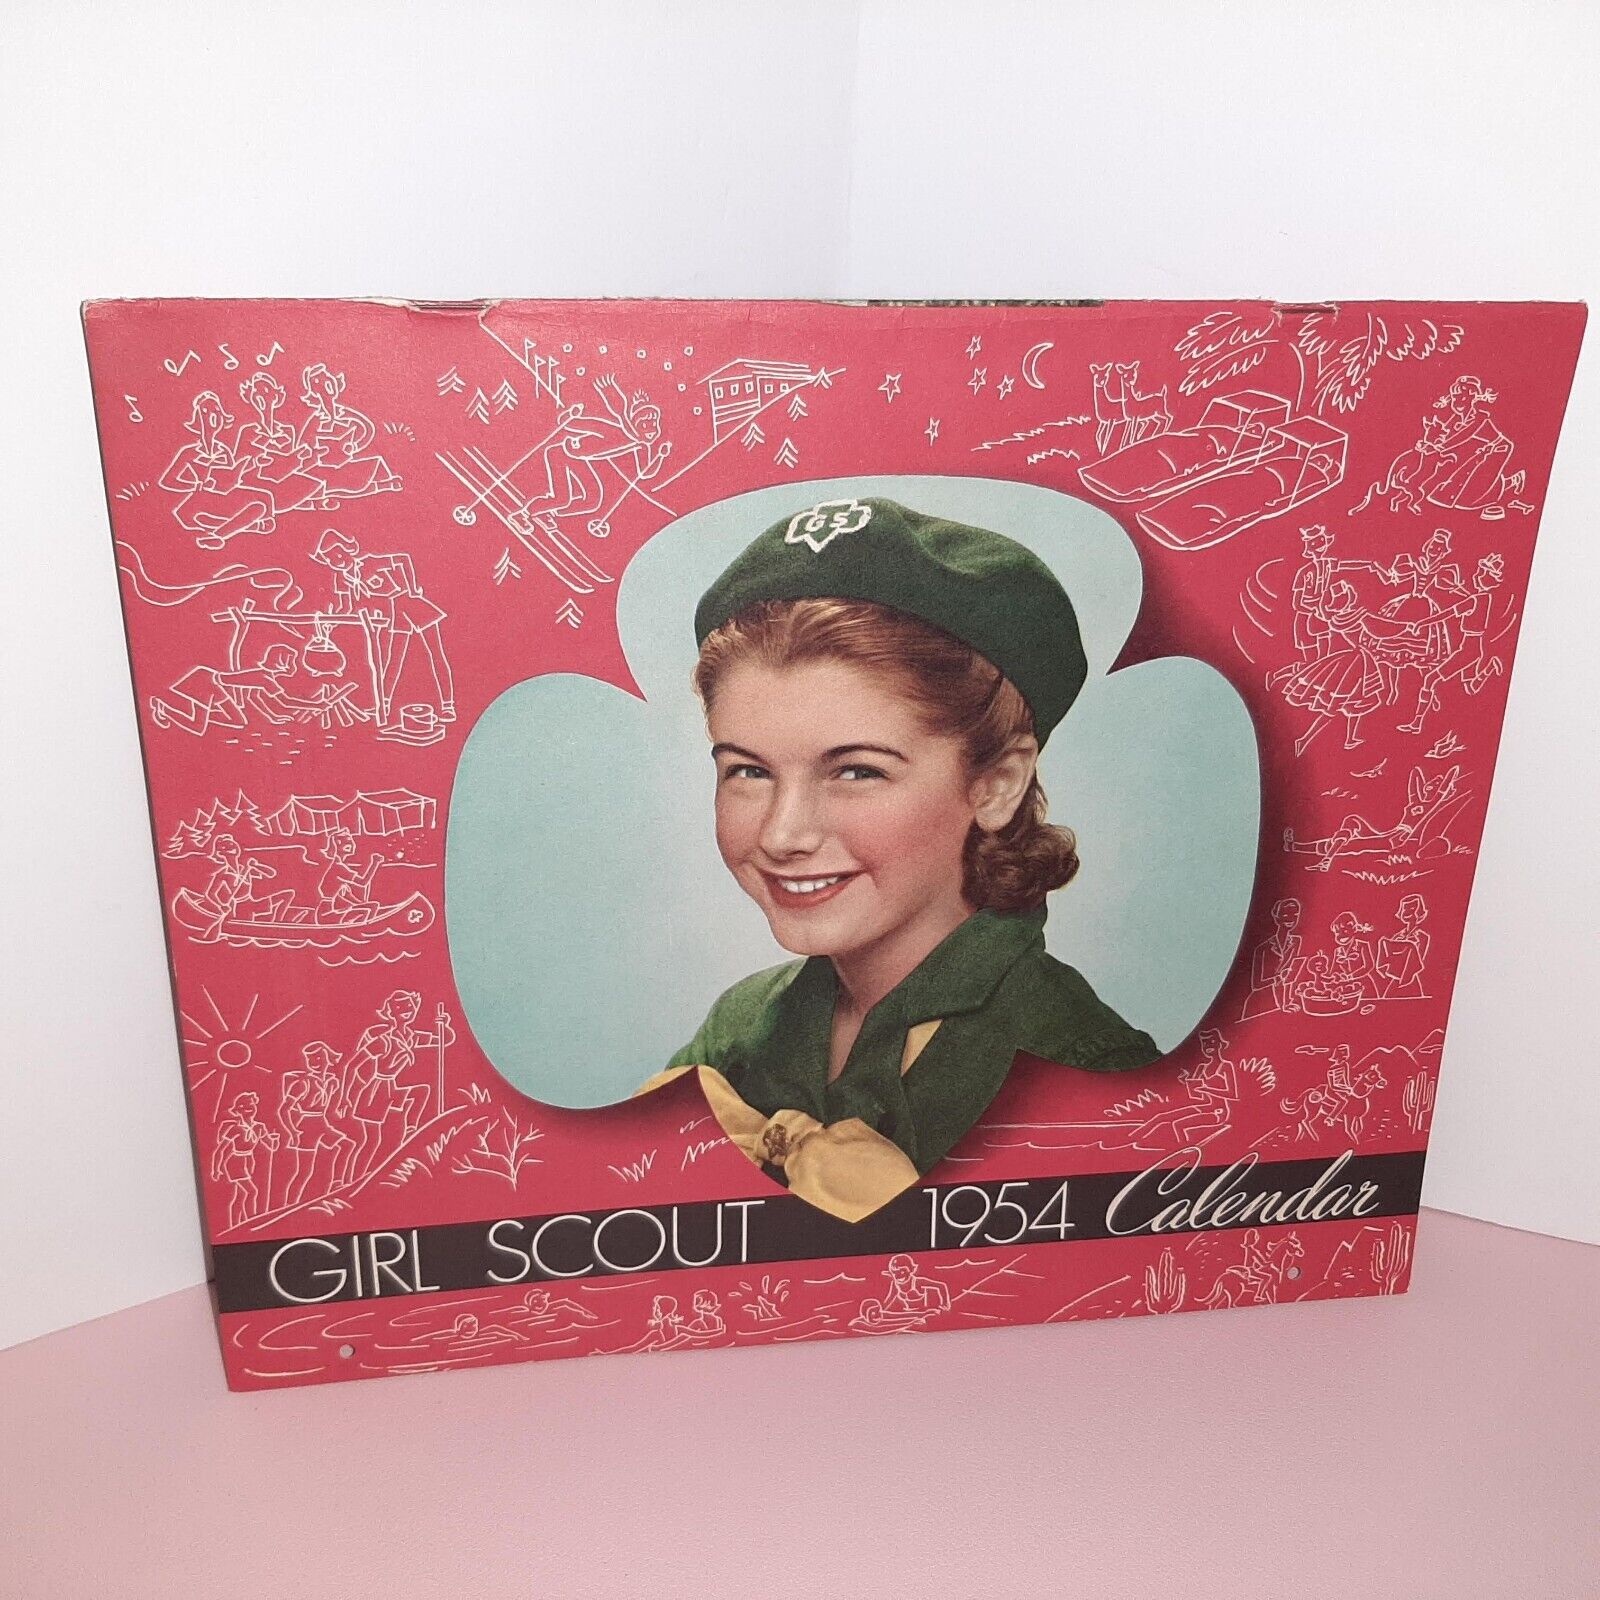 Vintage Girl Scout 1954 Calendar - Edith May Training School Ad